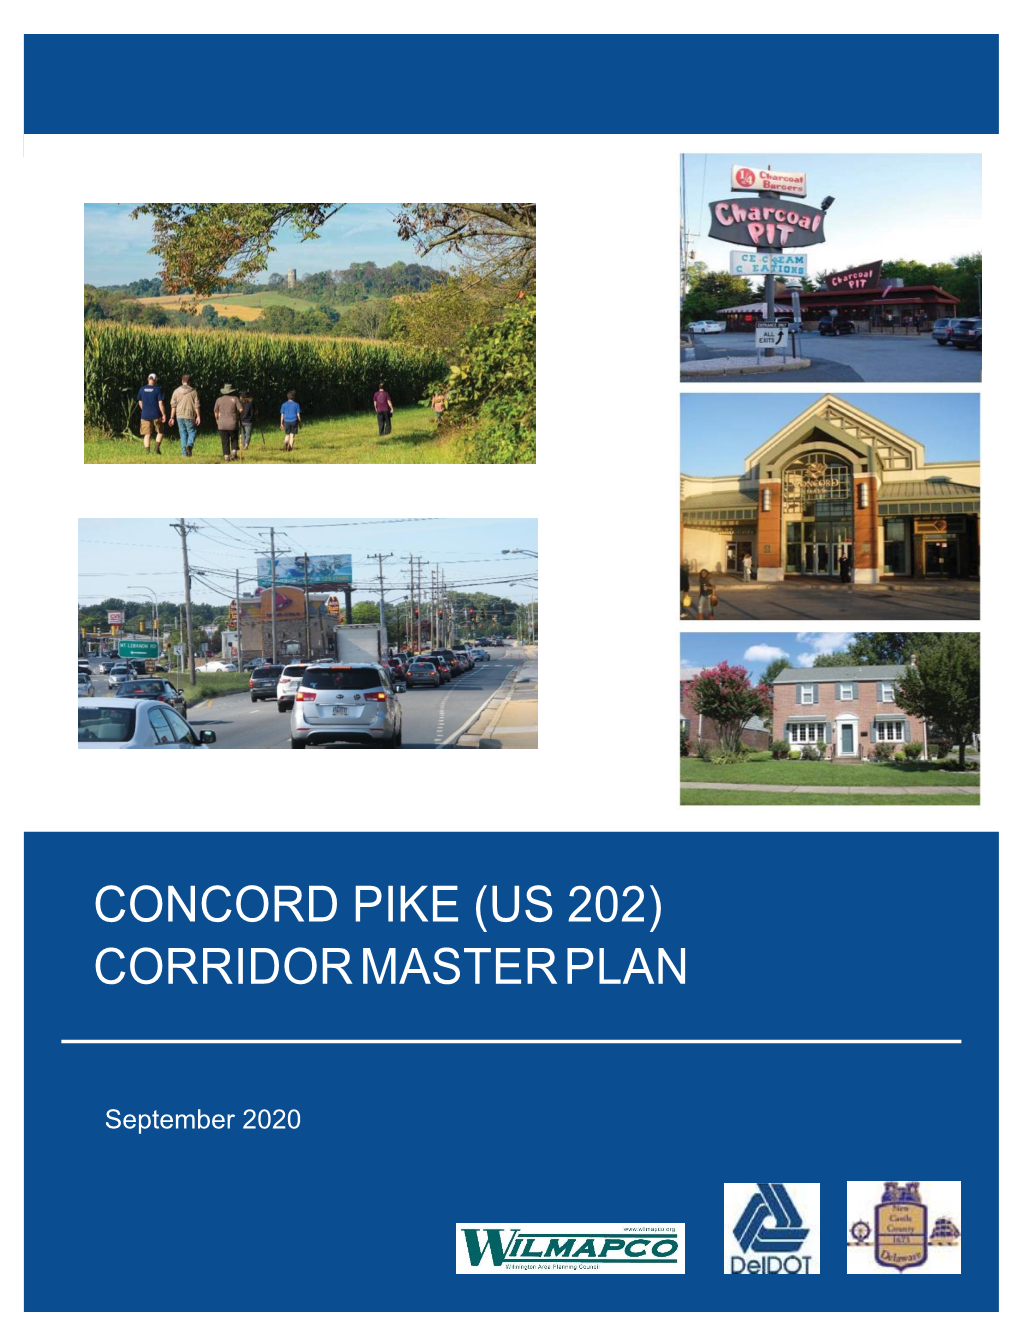 Concord Pike (Us 202) Corridor Master Plan